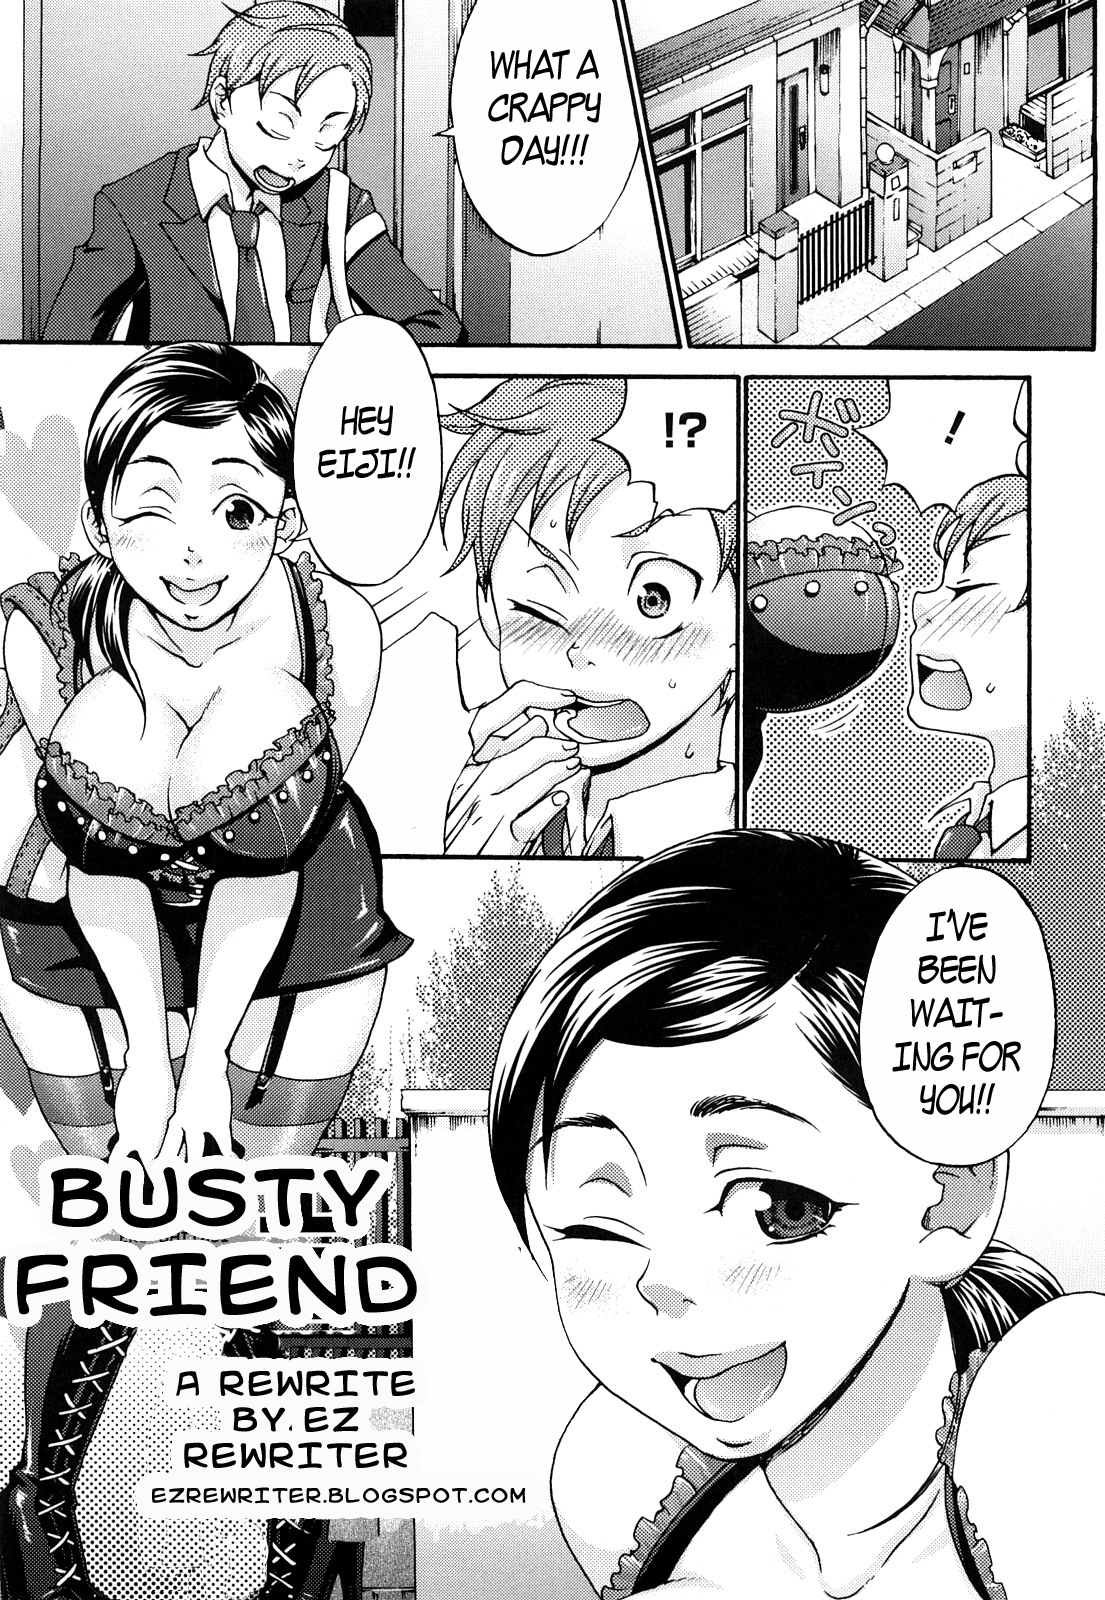 Busty Friend (rewrite by ezrewriter) 